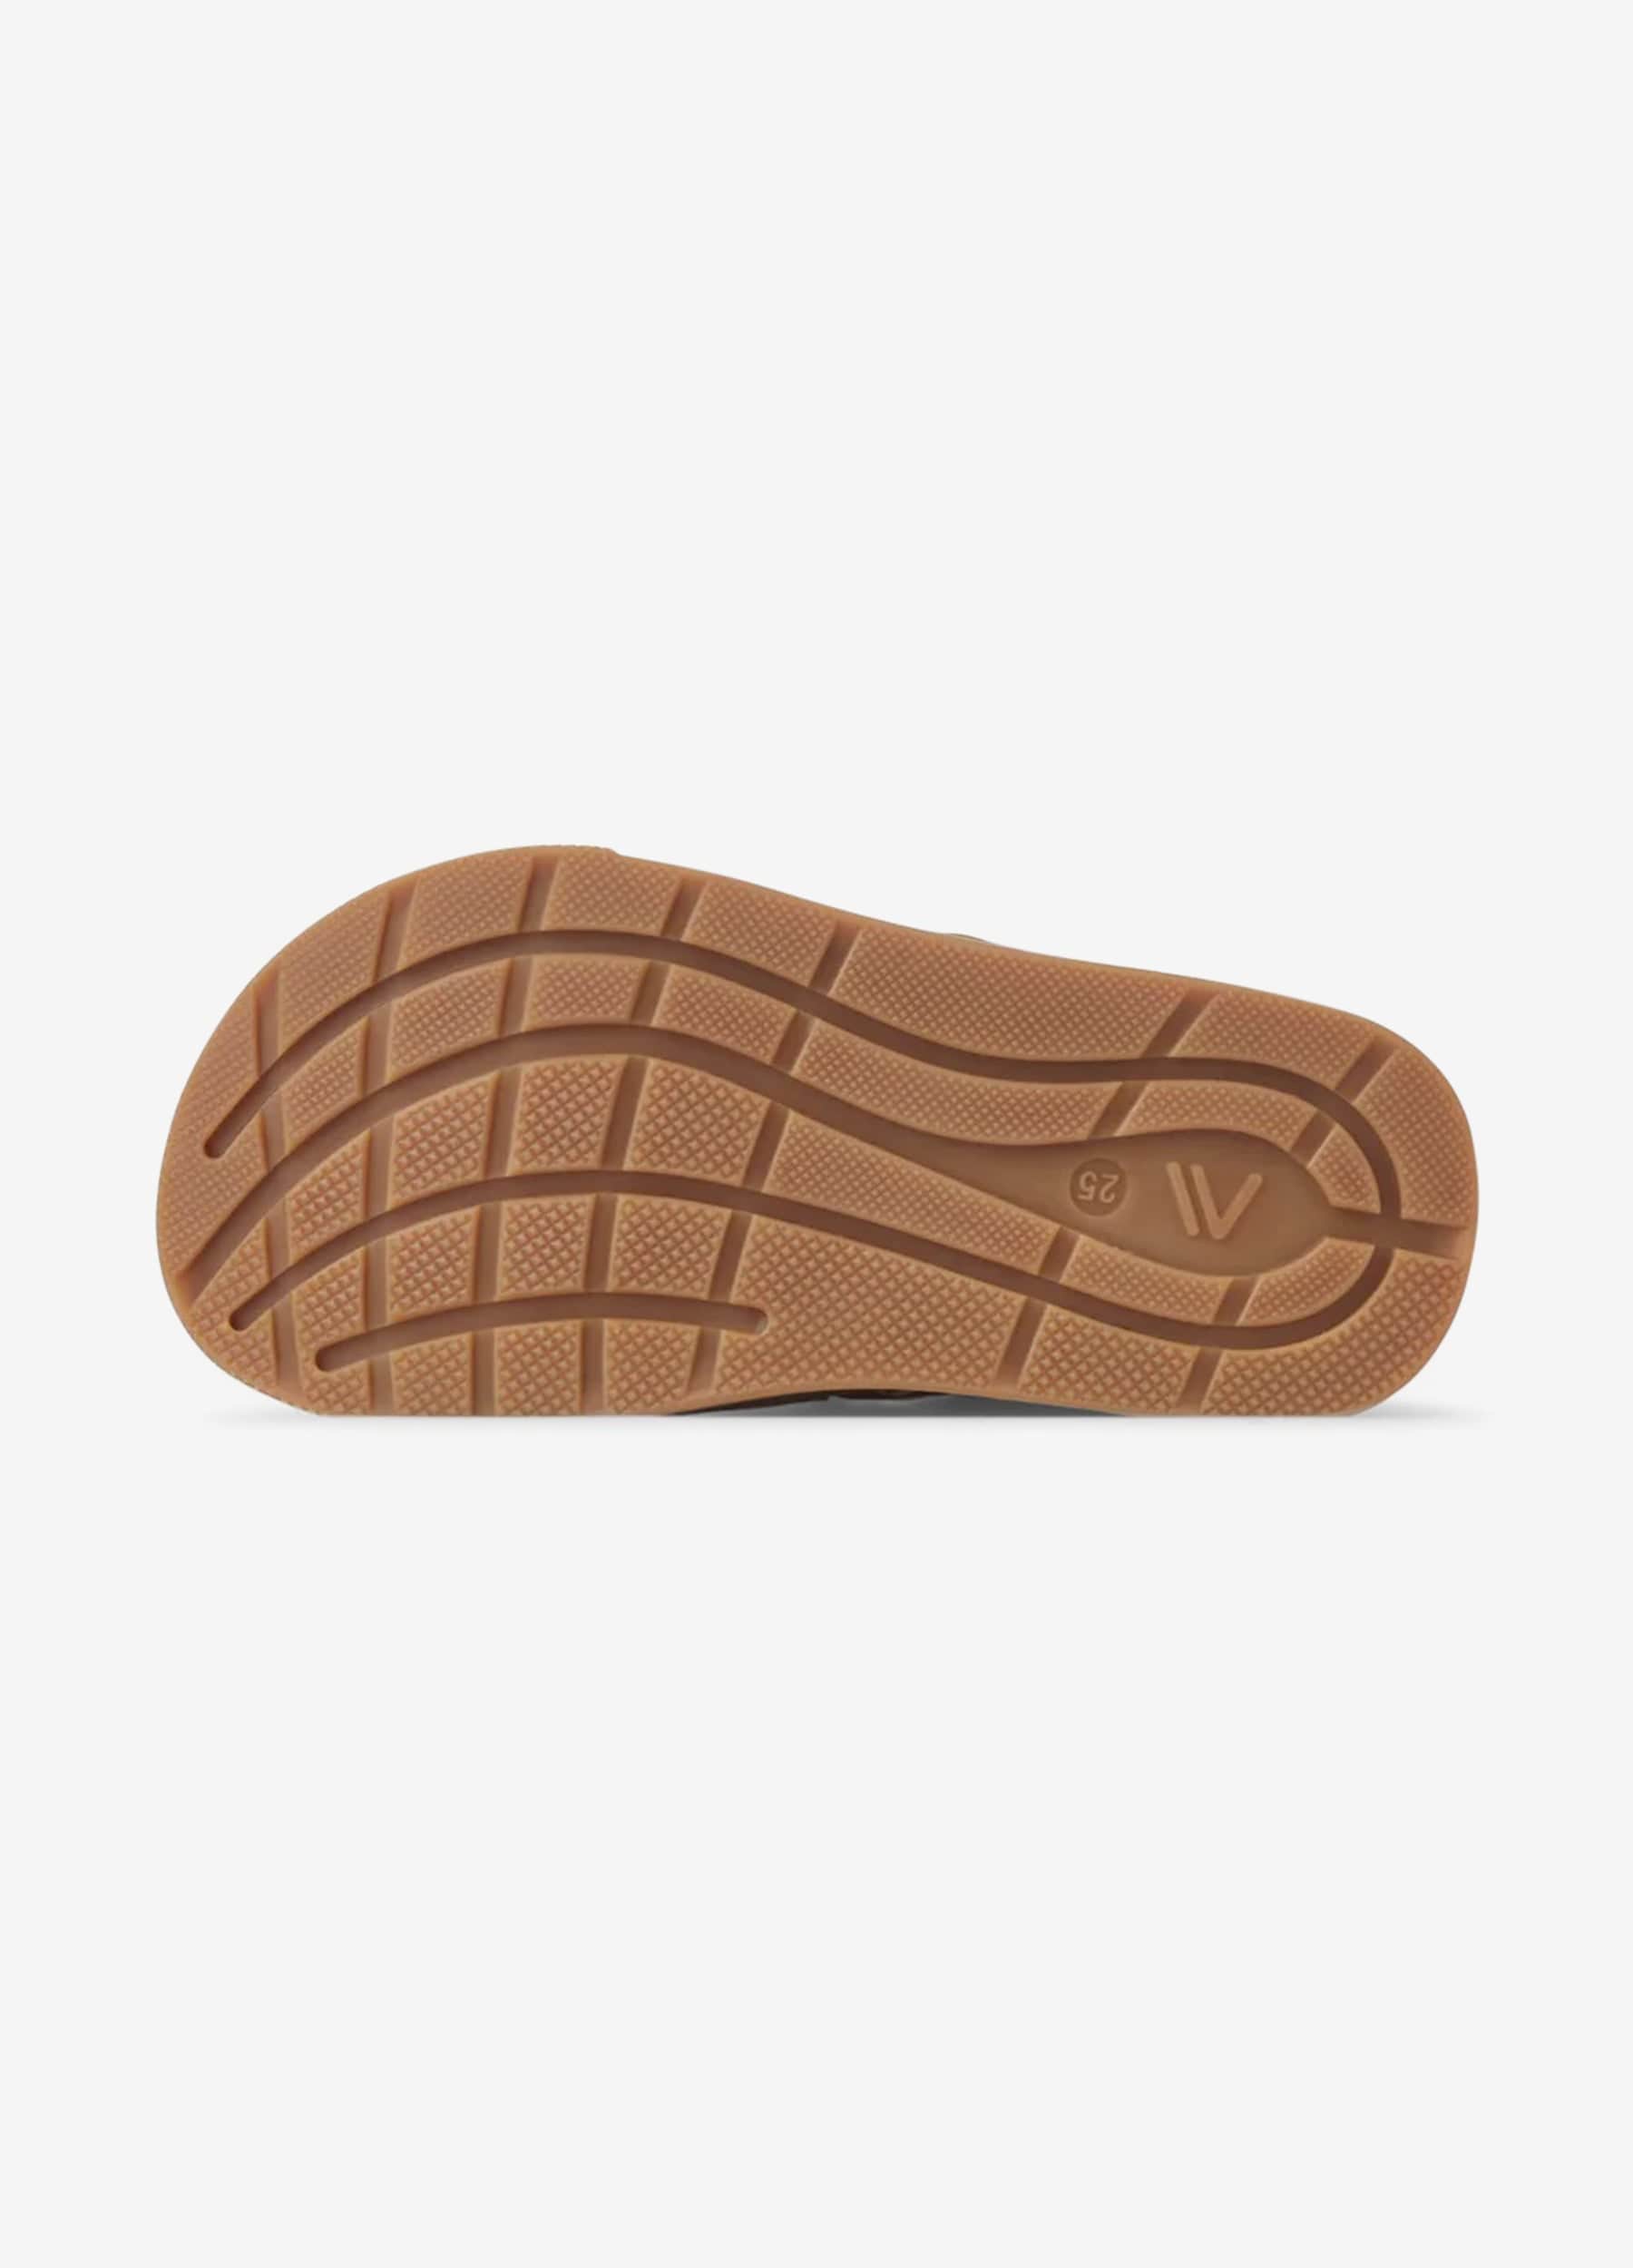 ASK - Foot -shaped Mid -Hi Sneaker